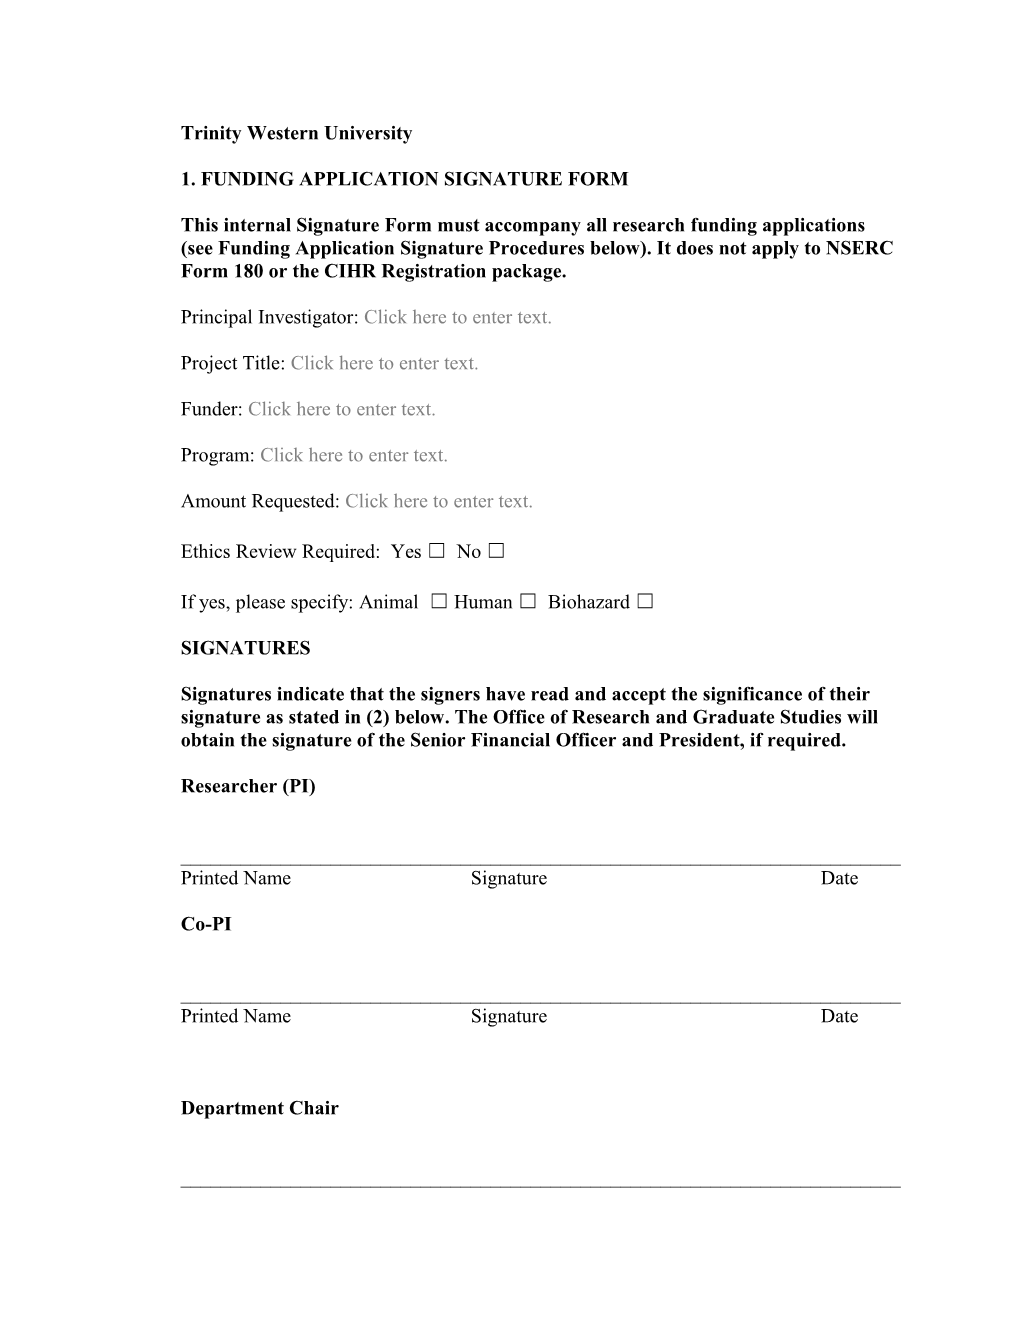 1. Funding Application Signature Form